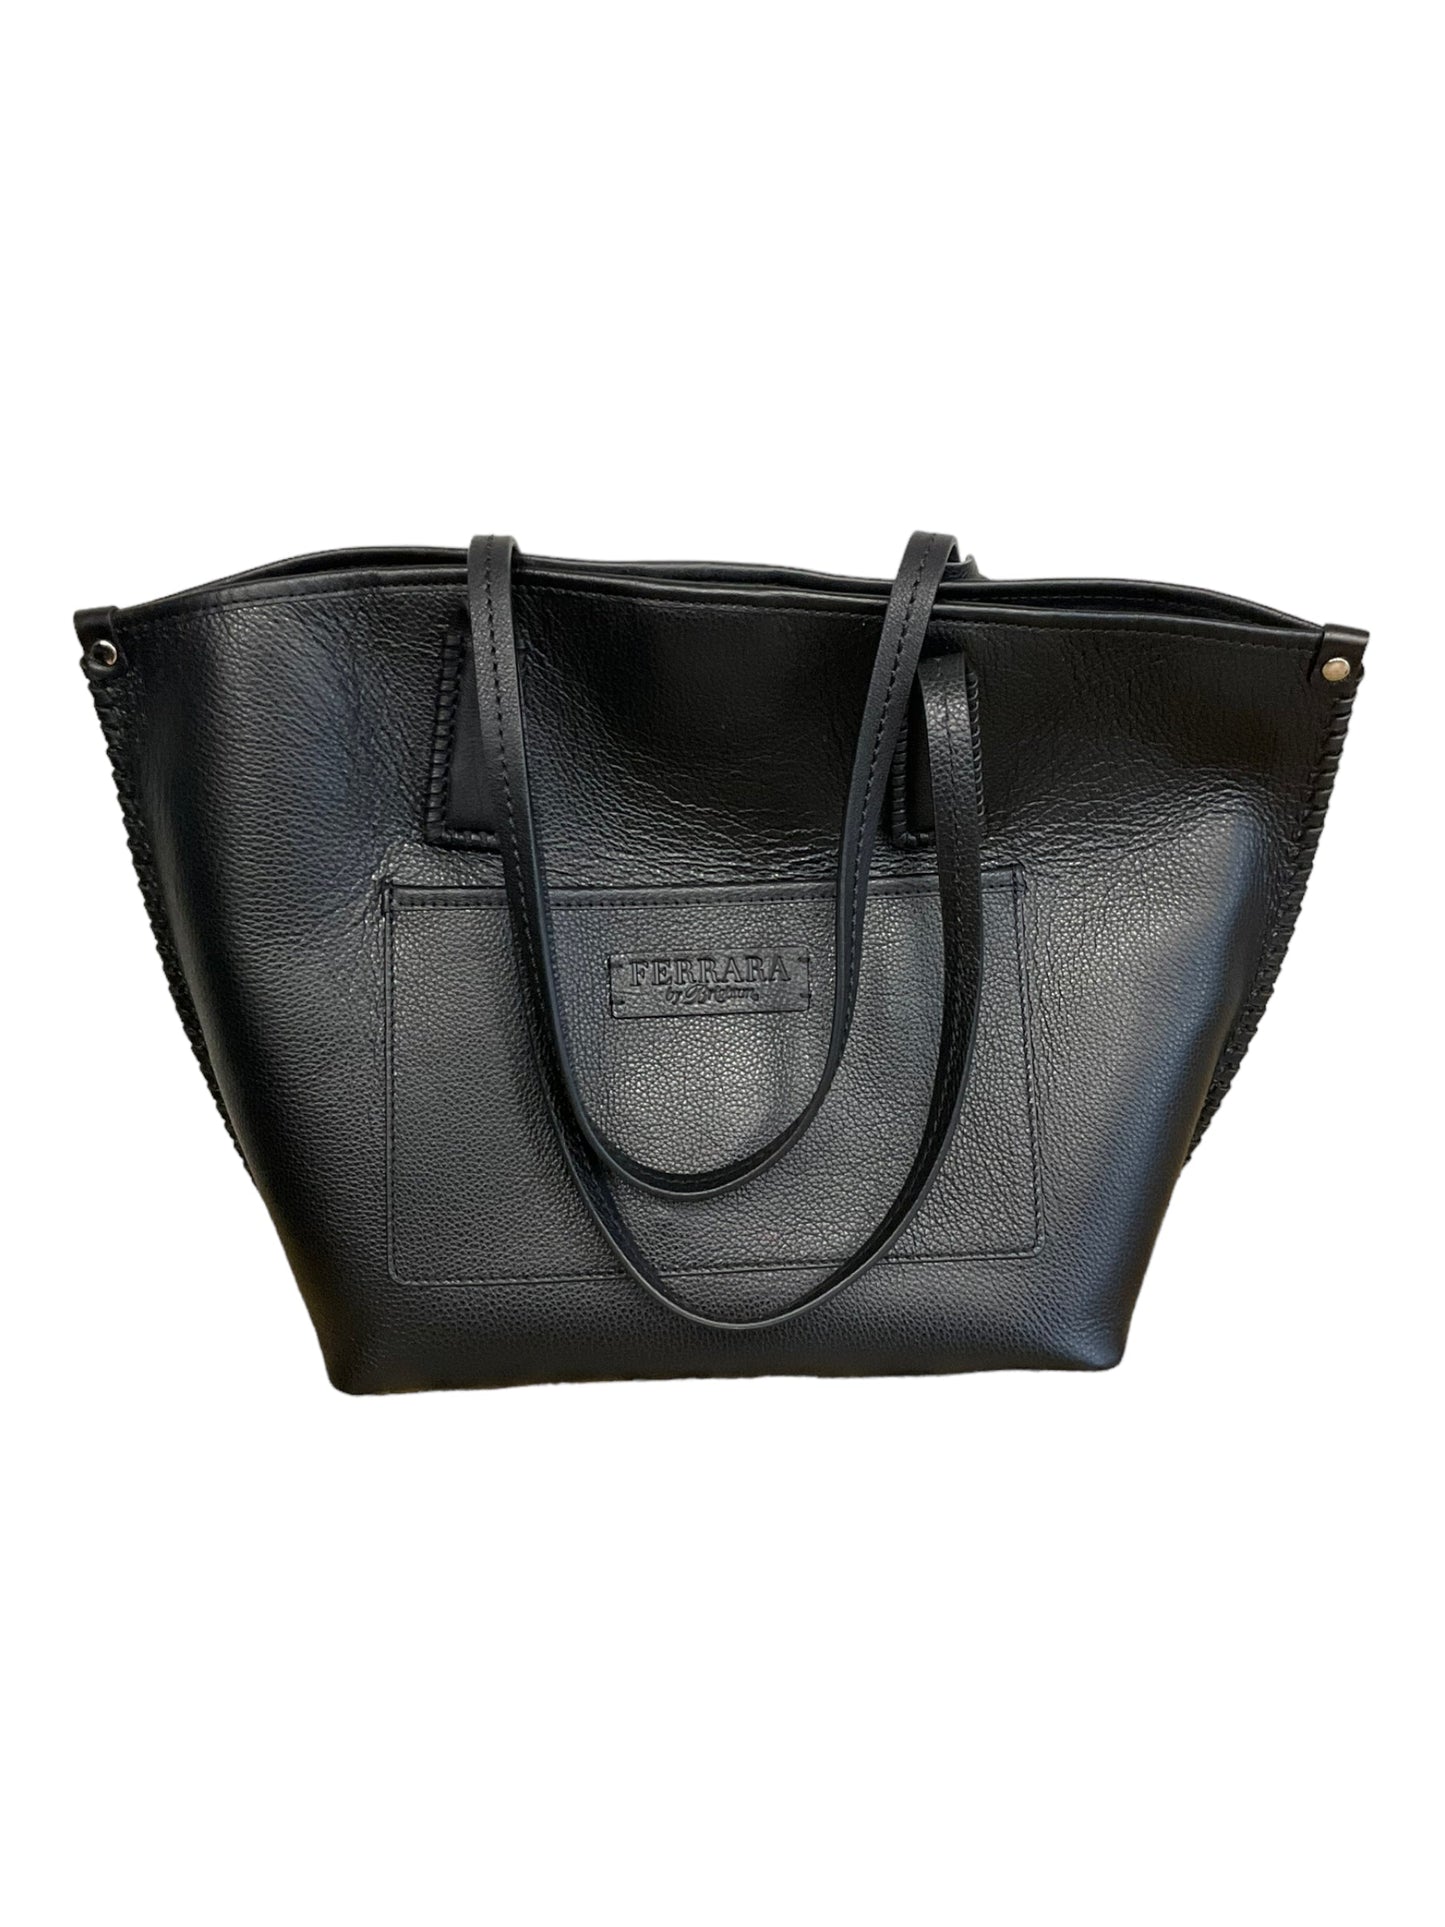 Handbag Leather By Brighton  Size: Large